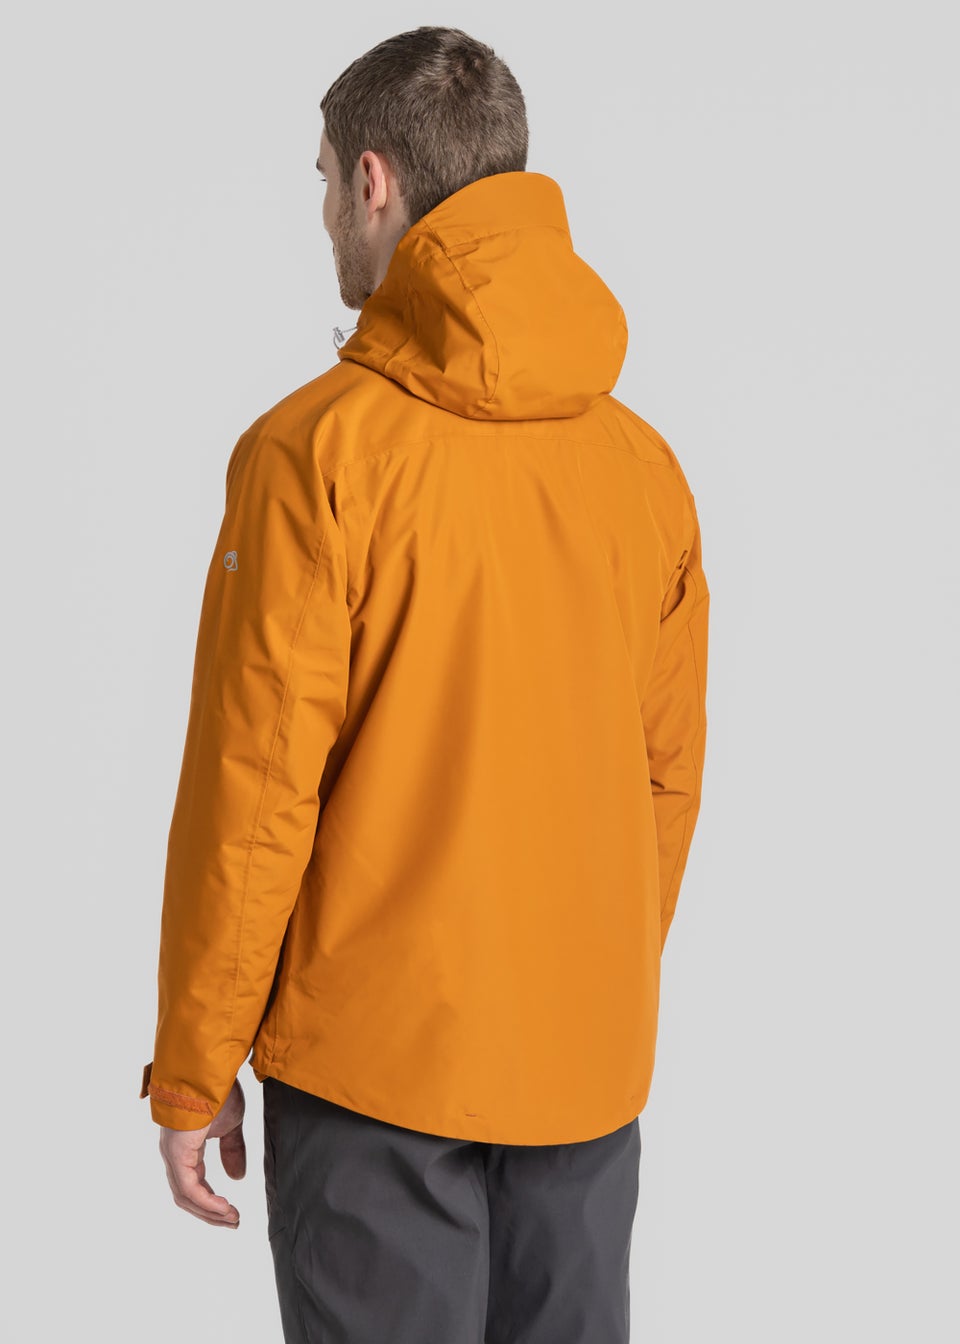 Craghoppers Orange Creevey Jacket